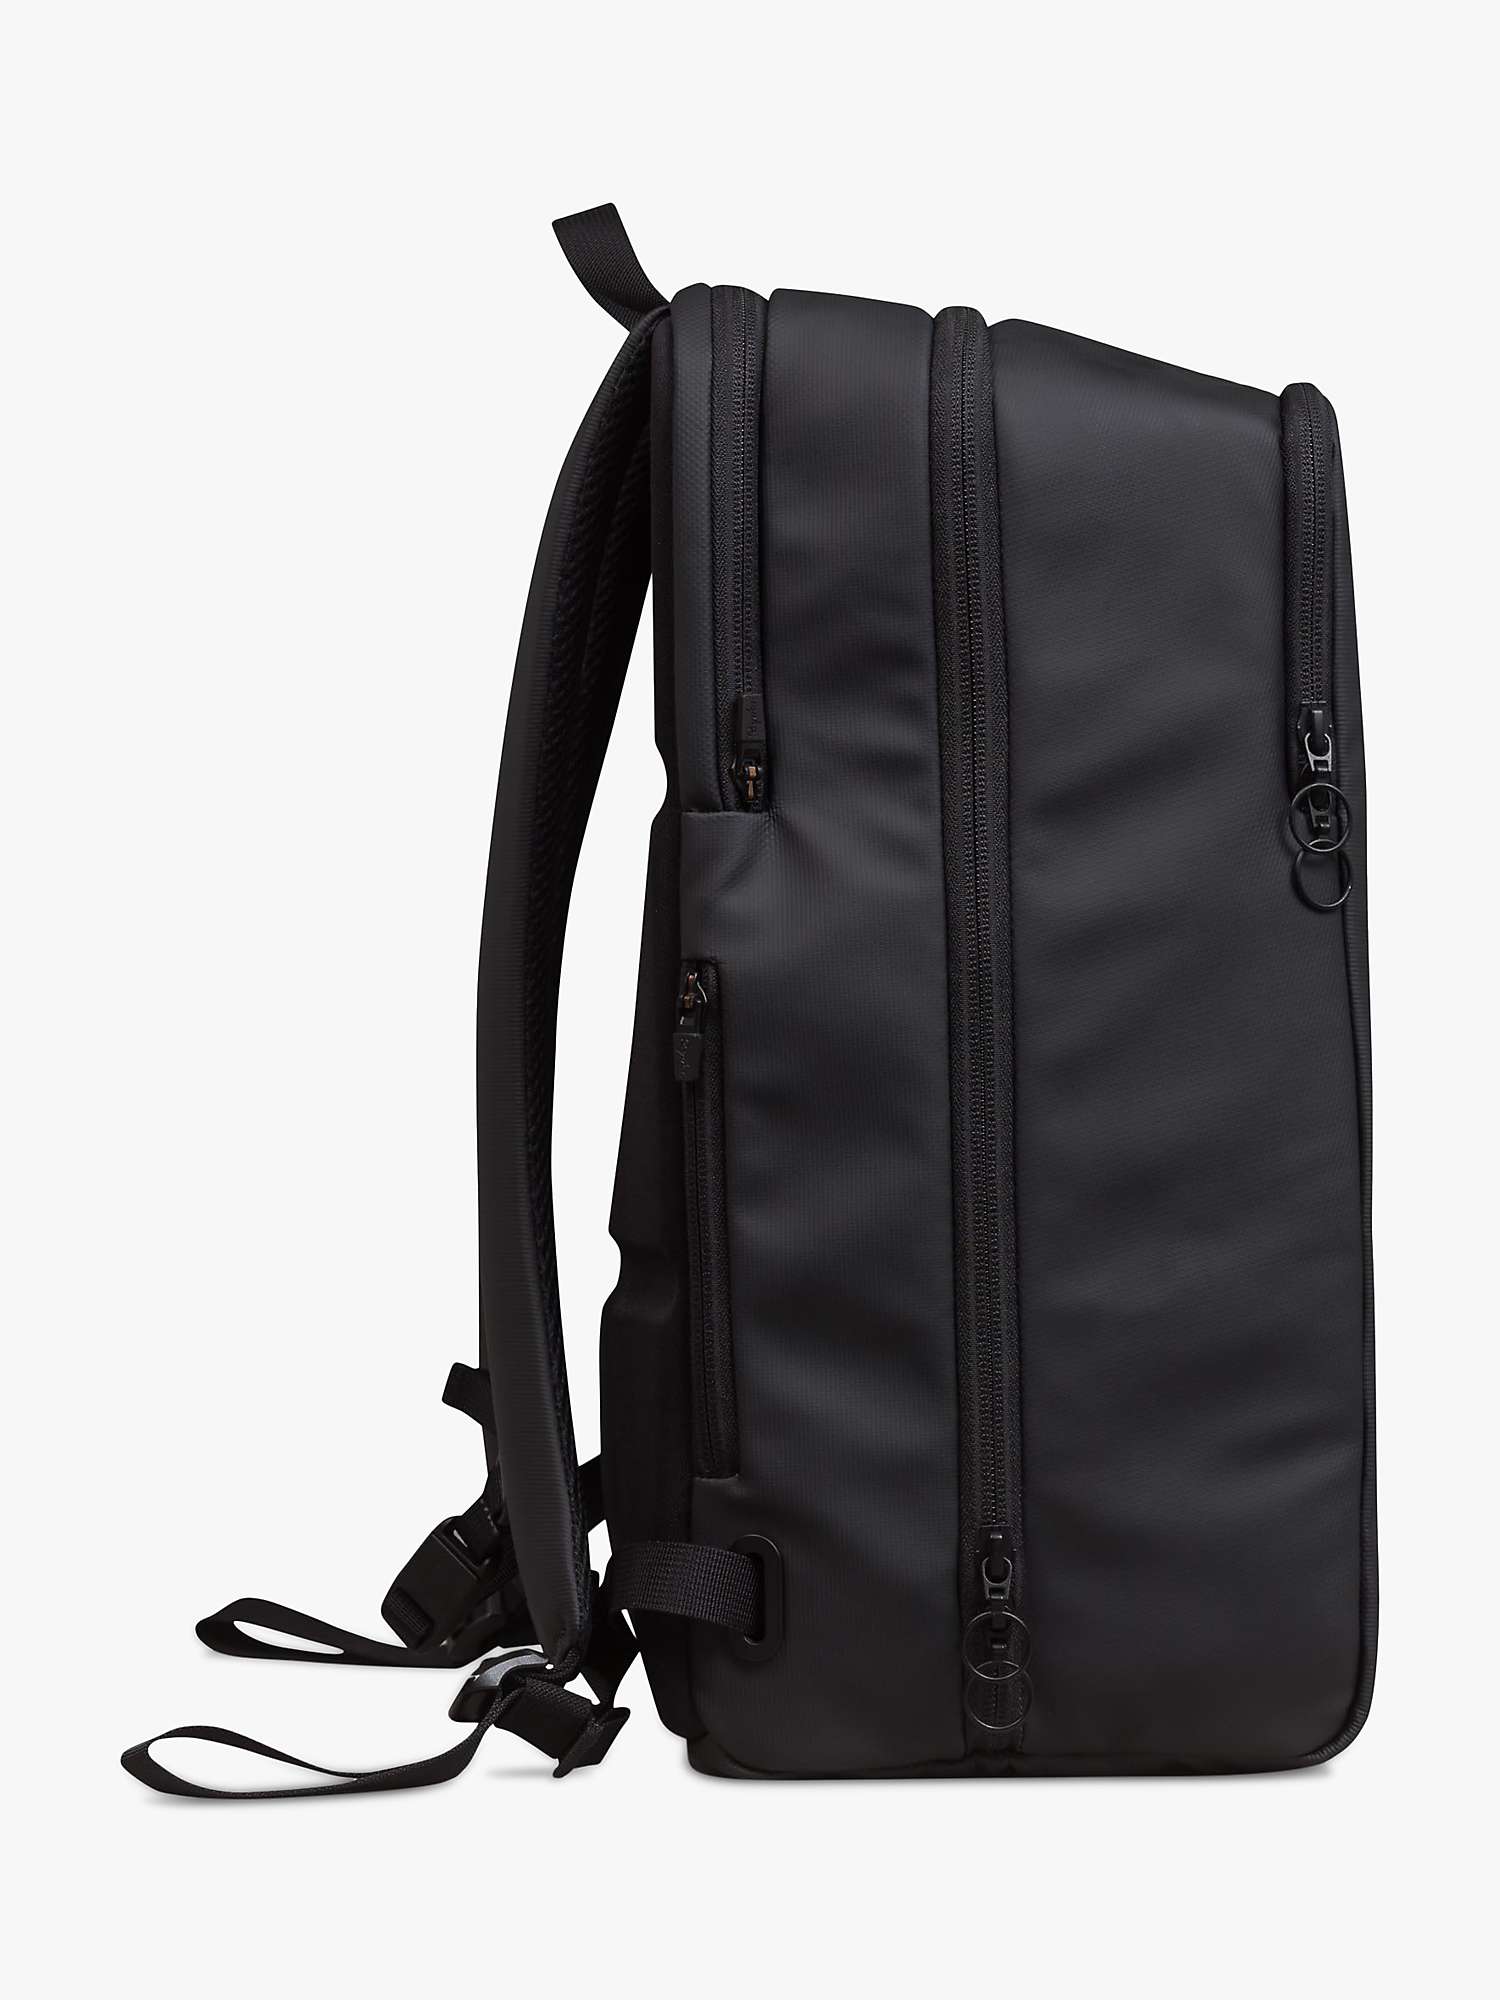 Buy Rapha Small Travel Backpack Online at johnlewis.com